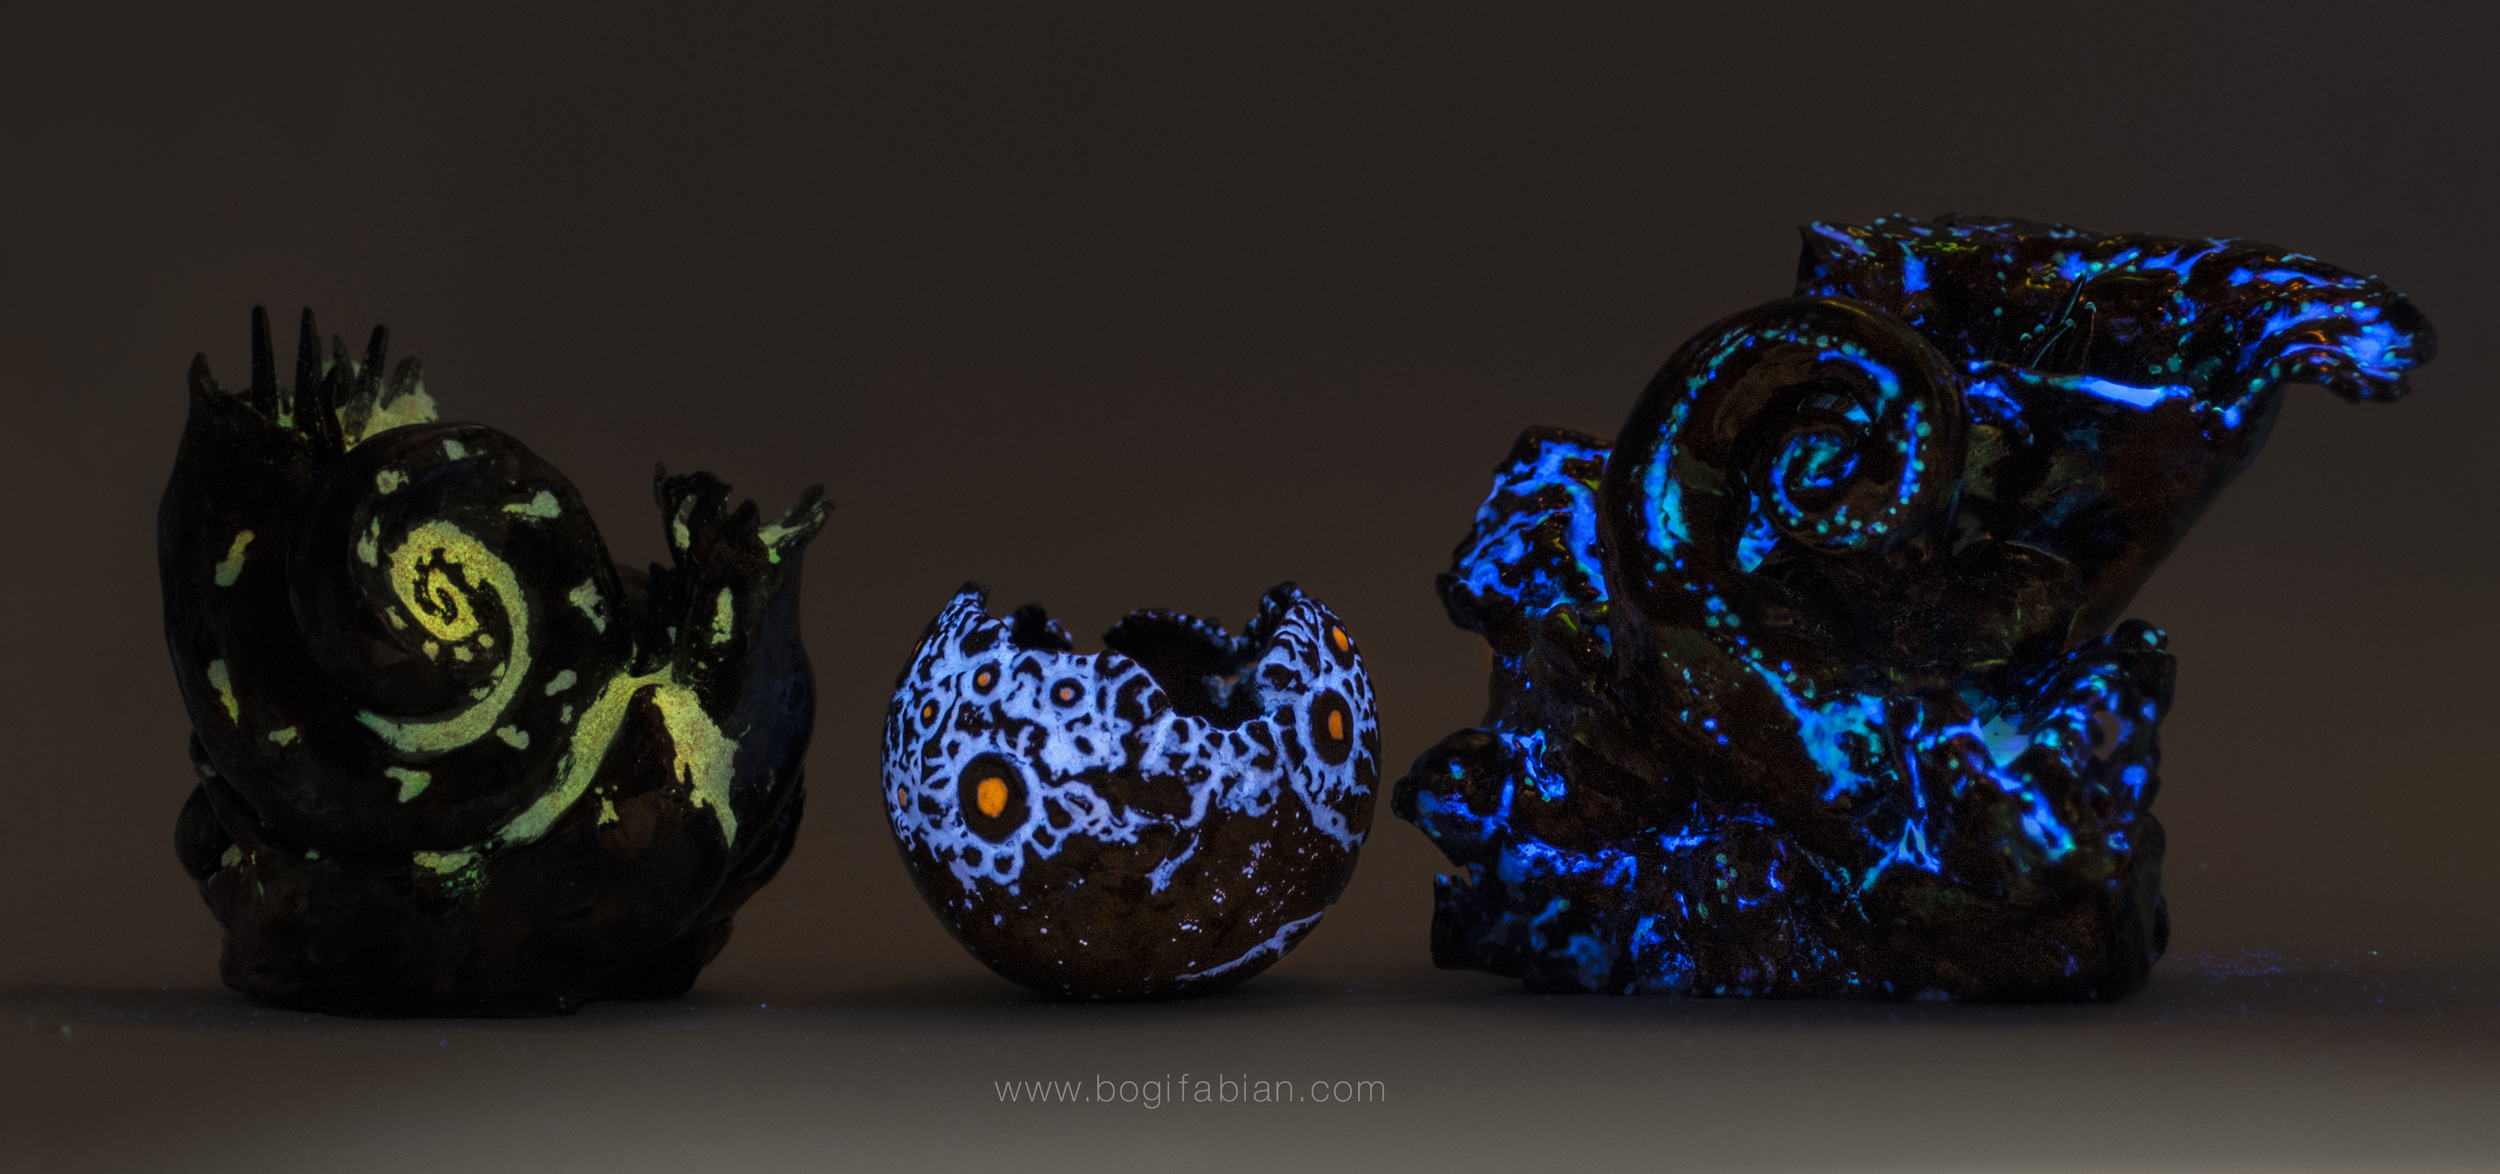 Bogi Fabian Glowing Ceramic Jewelry sculpture day night 2.jpg